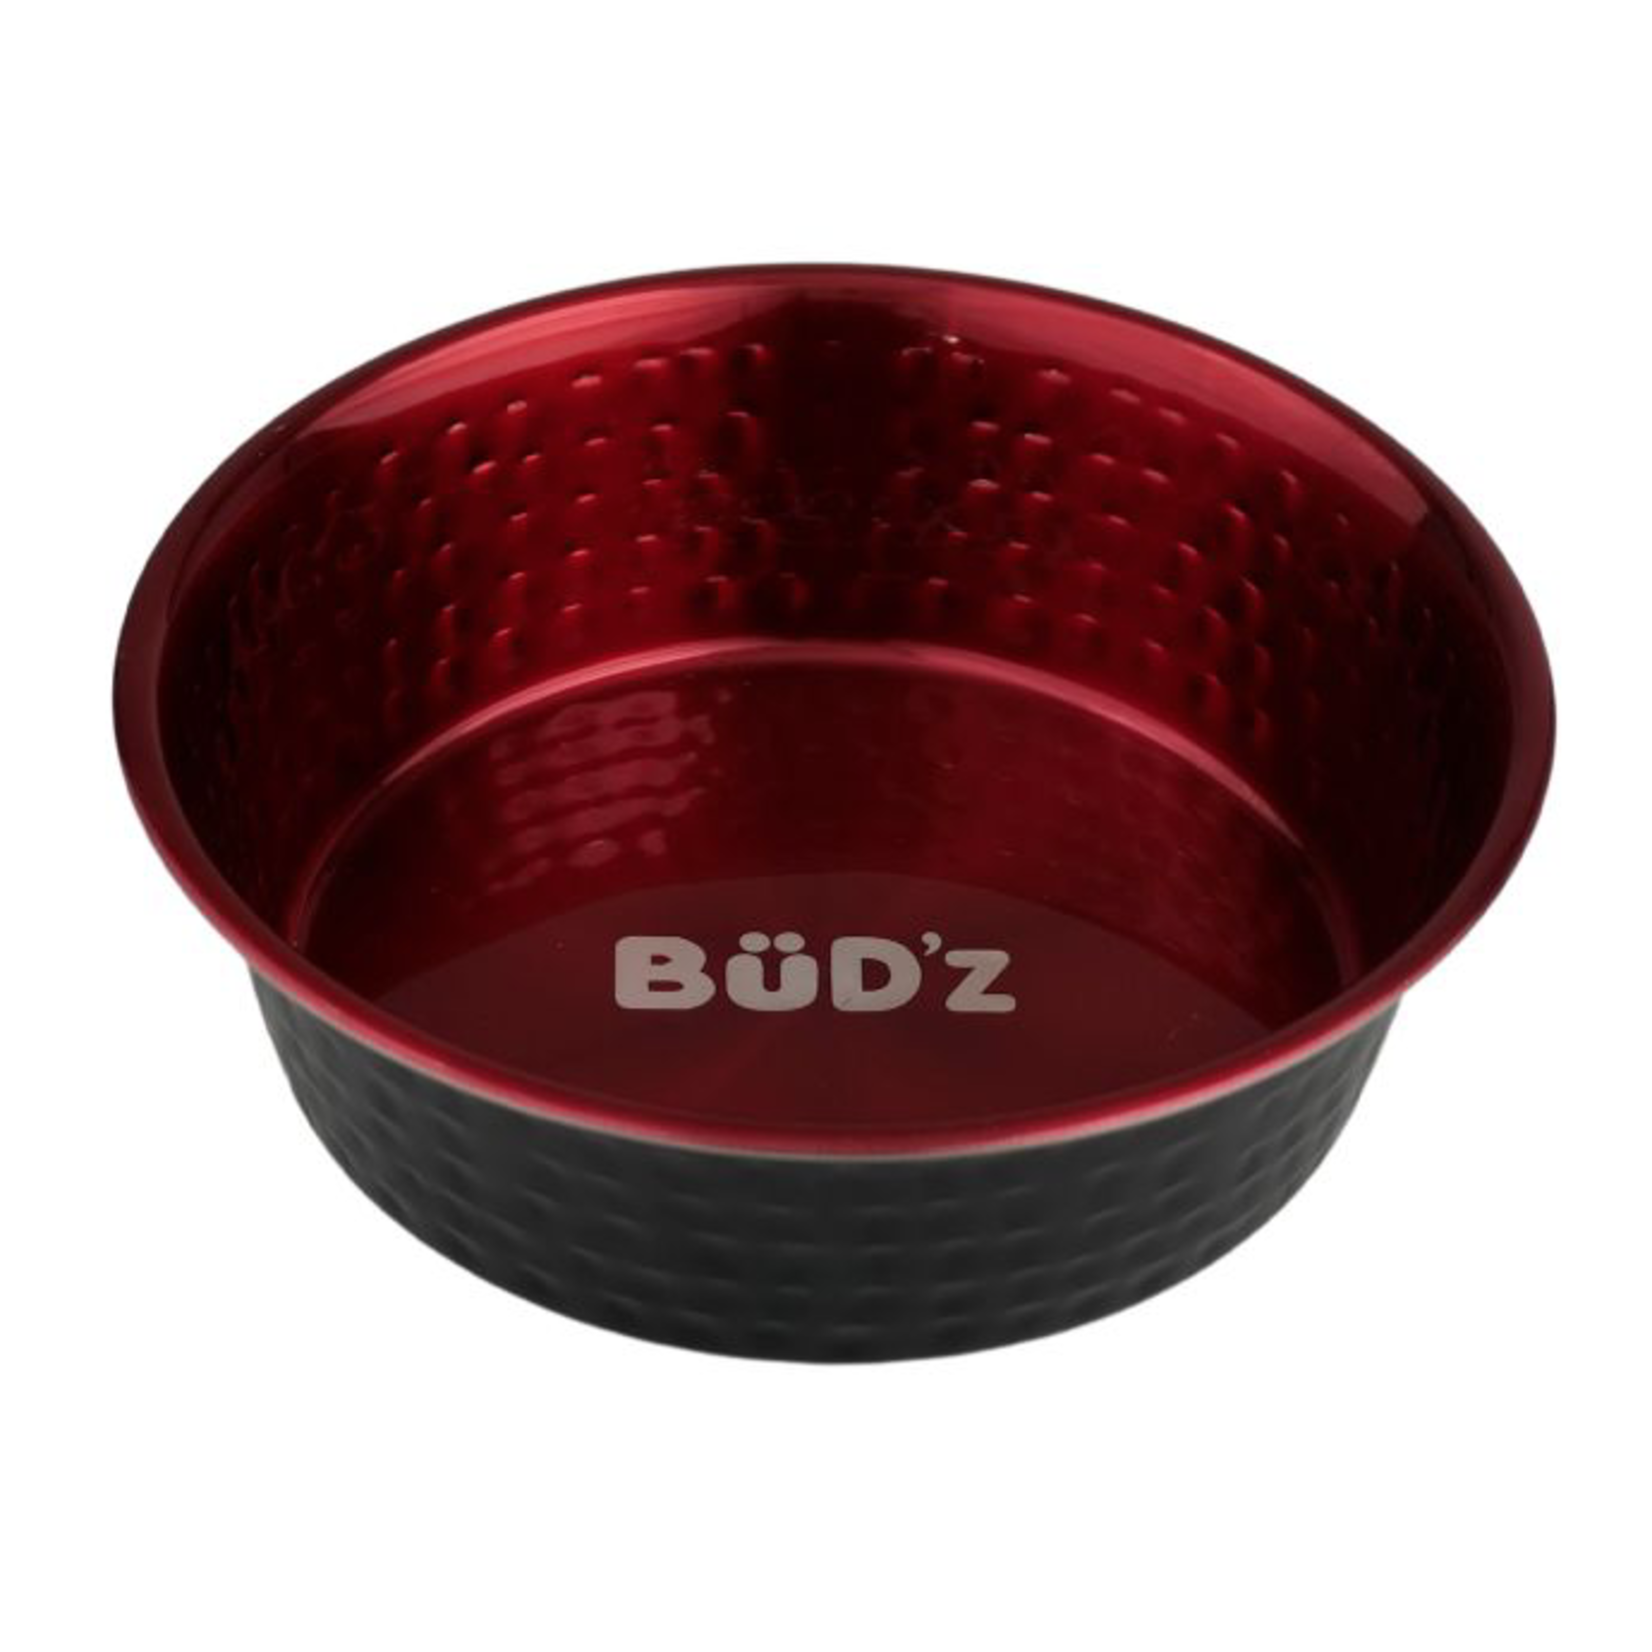 BUD-Z BUD'Z STAINLESS STEEL BOWL, HAMMERED INTERIOR - RED 480ml (16oz)